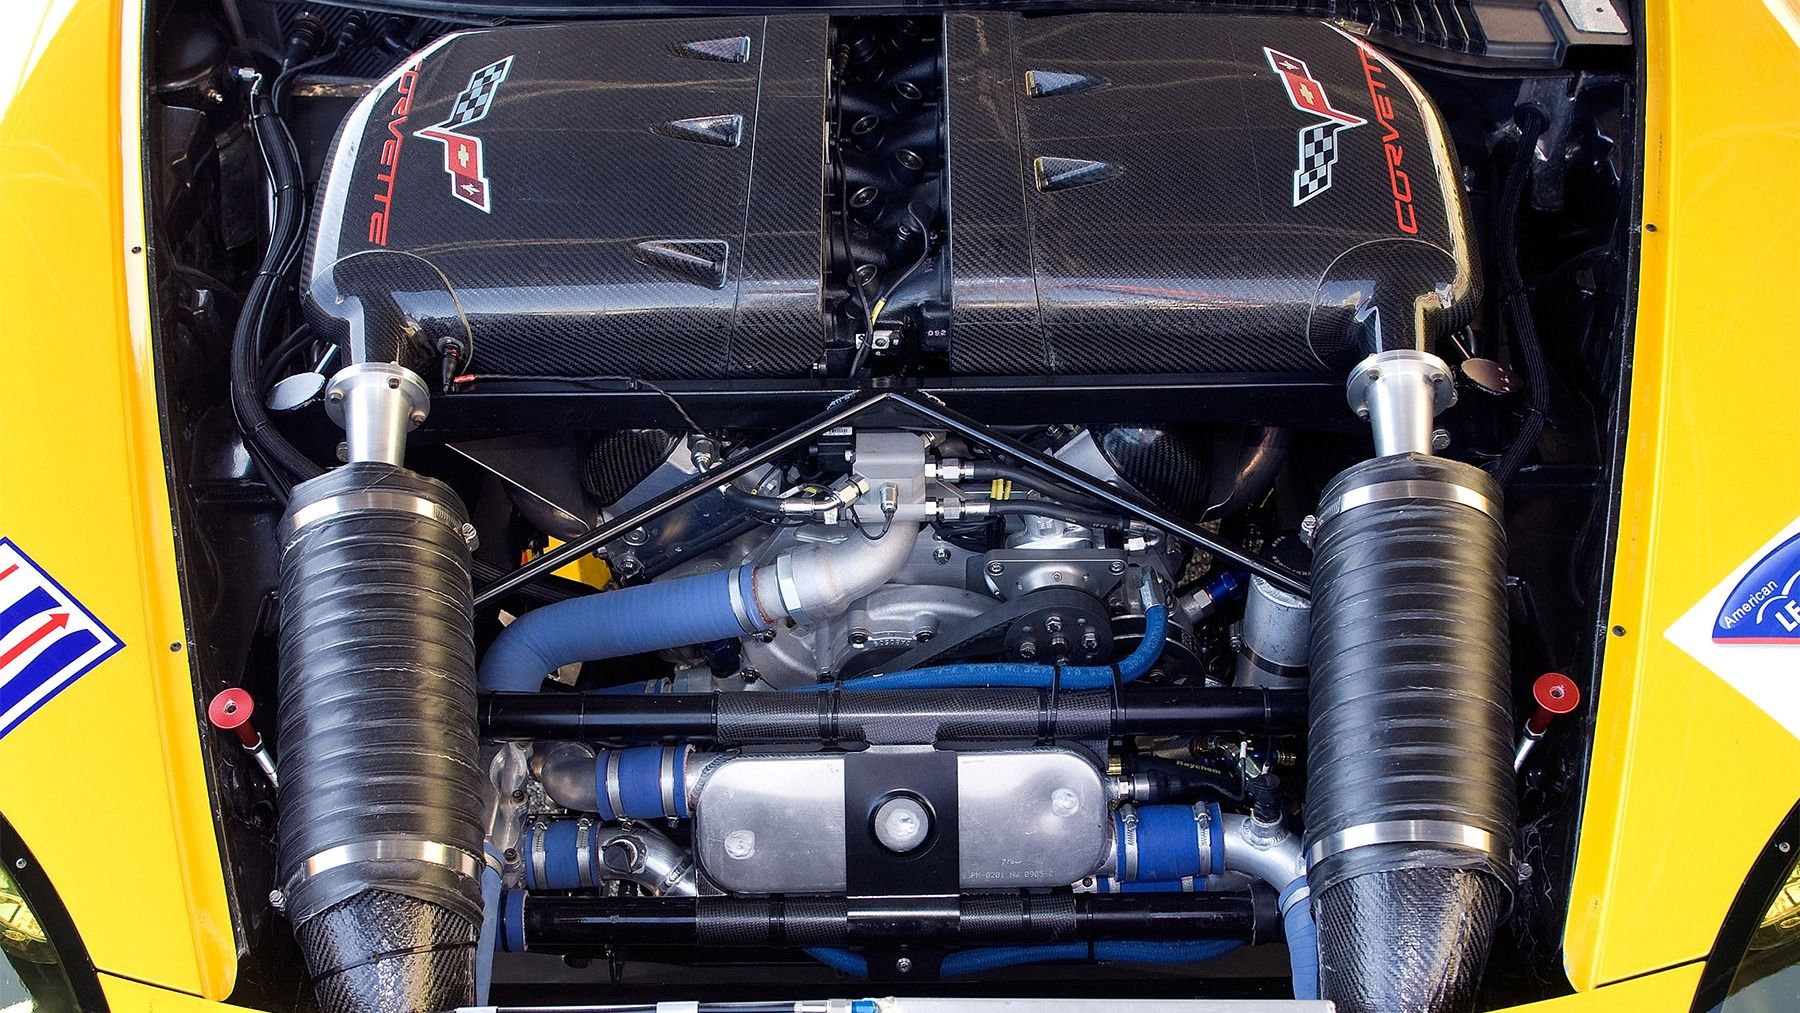 7.0 Liter Corvette C6.R Engine via Motor Authority